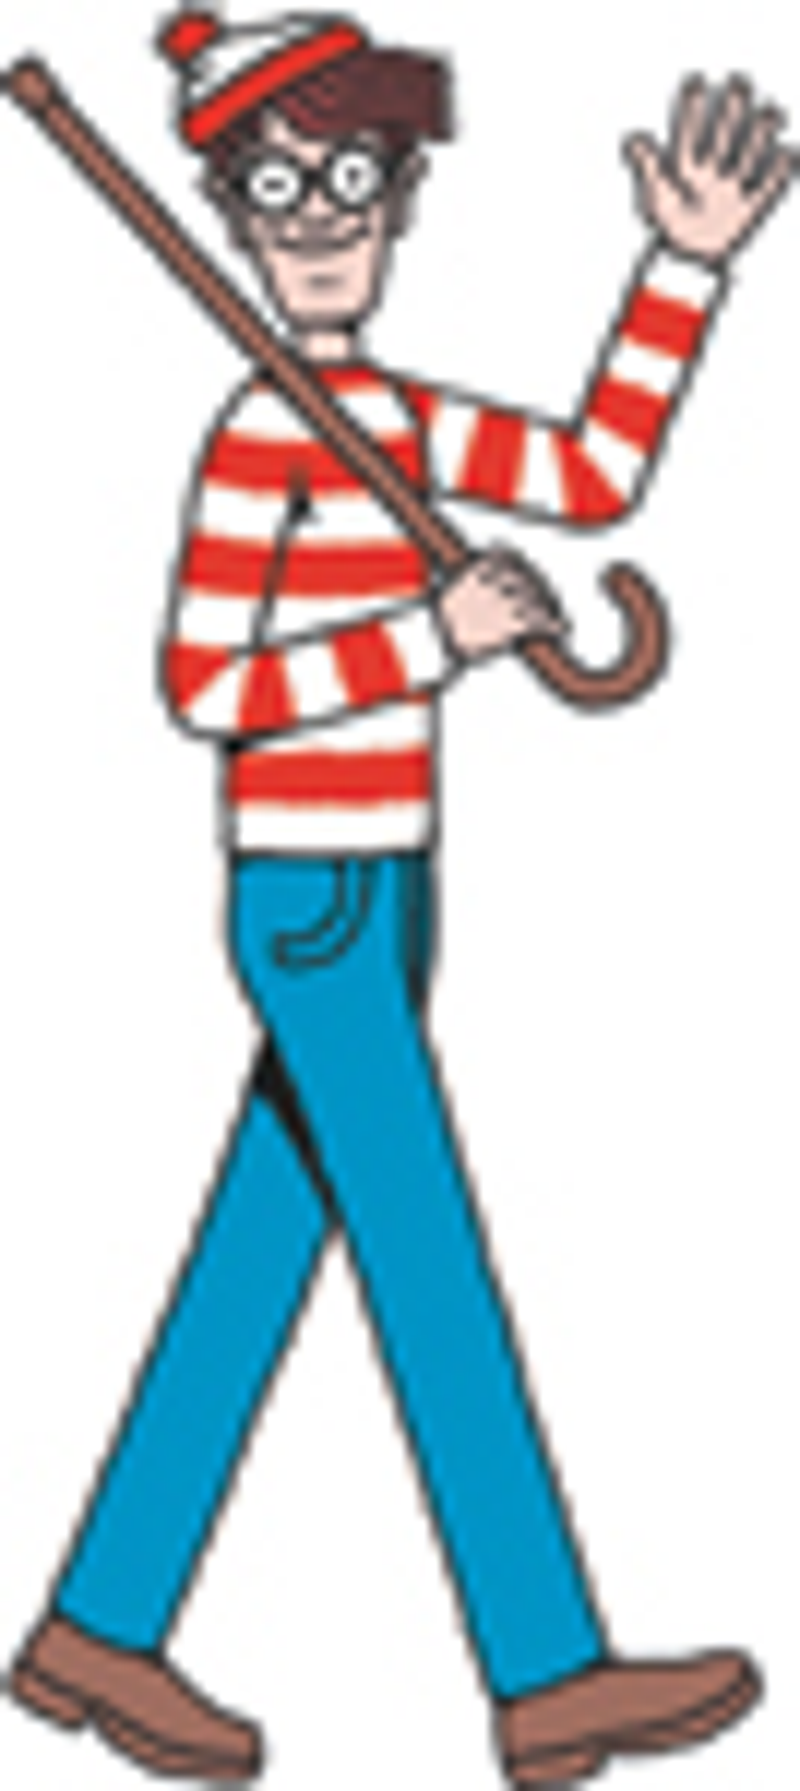 Waldo_Waving.jpg